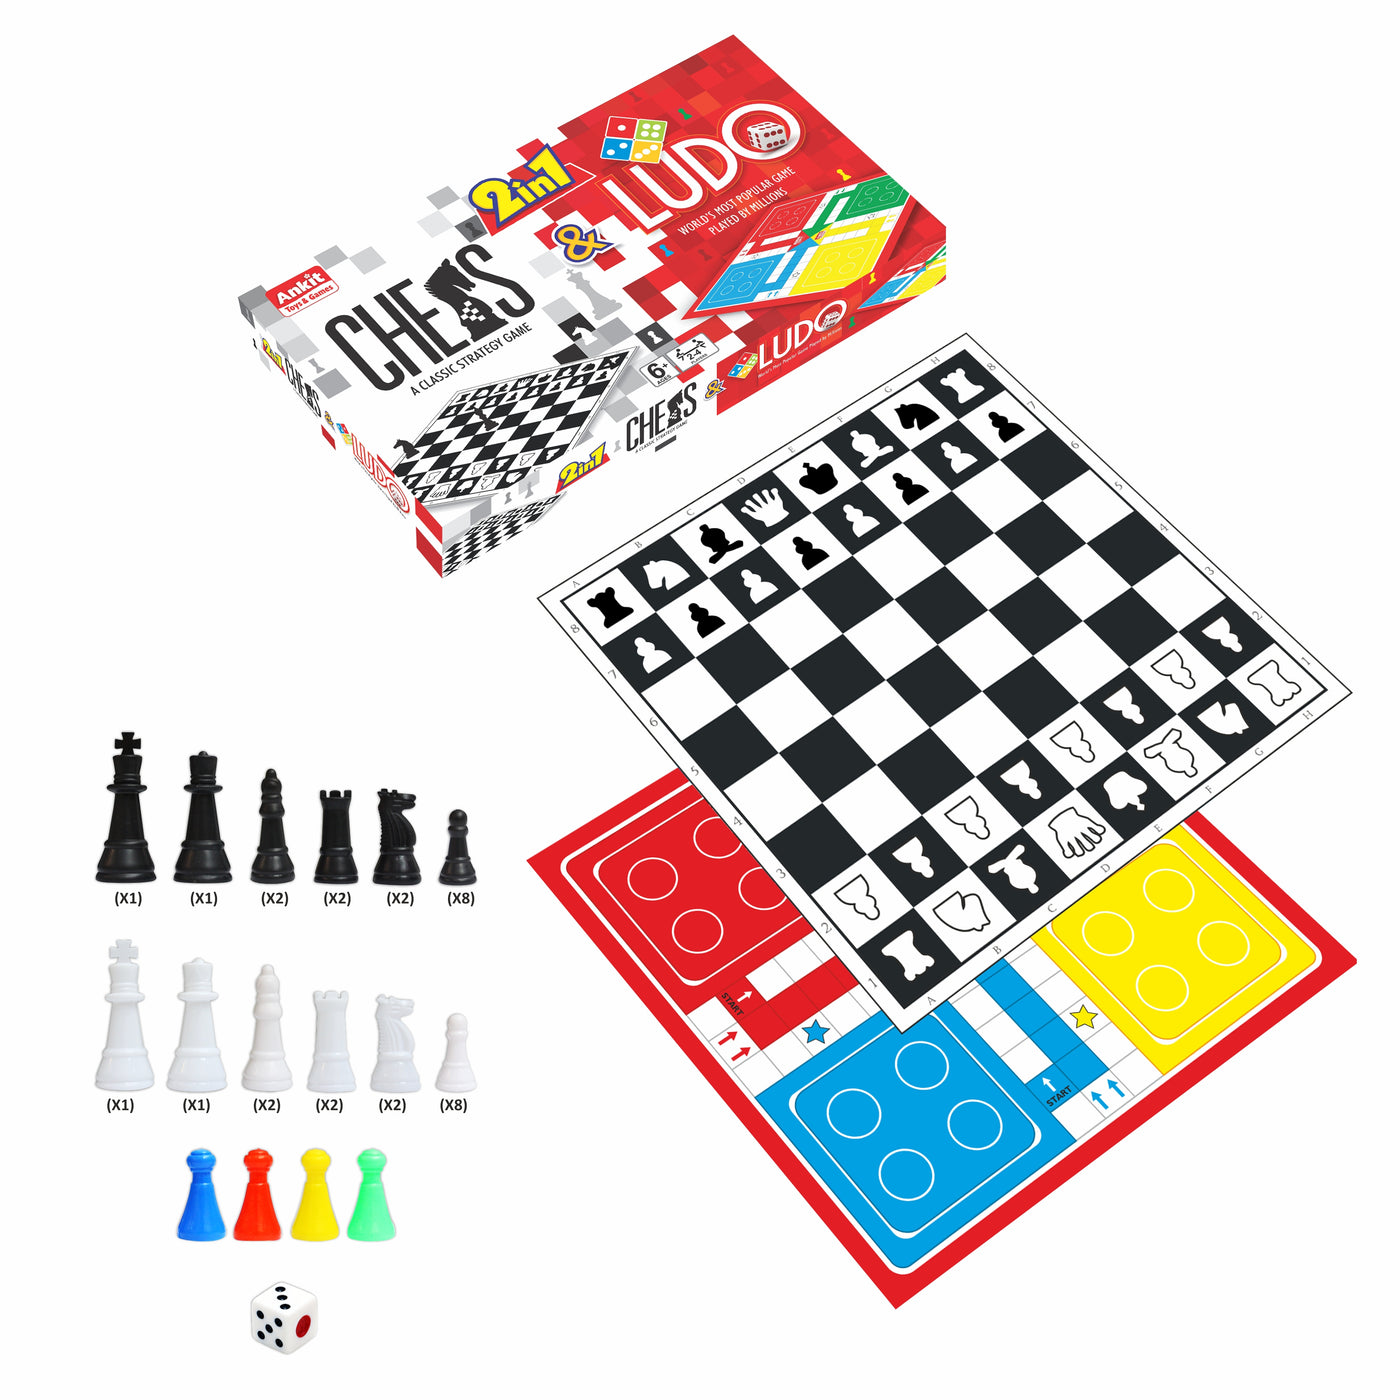 2 in 1 Chess & Ludo - Board Game